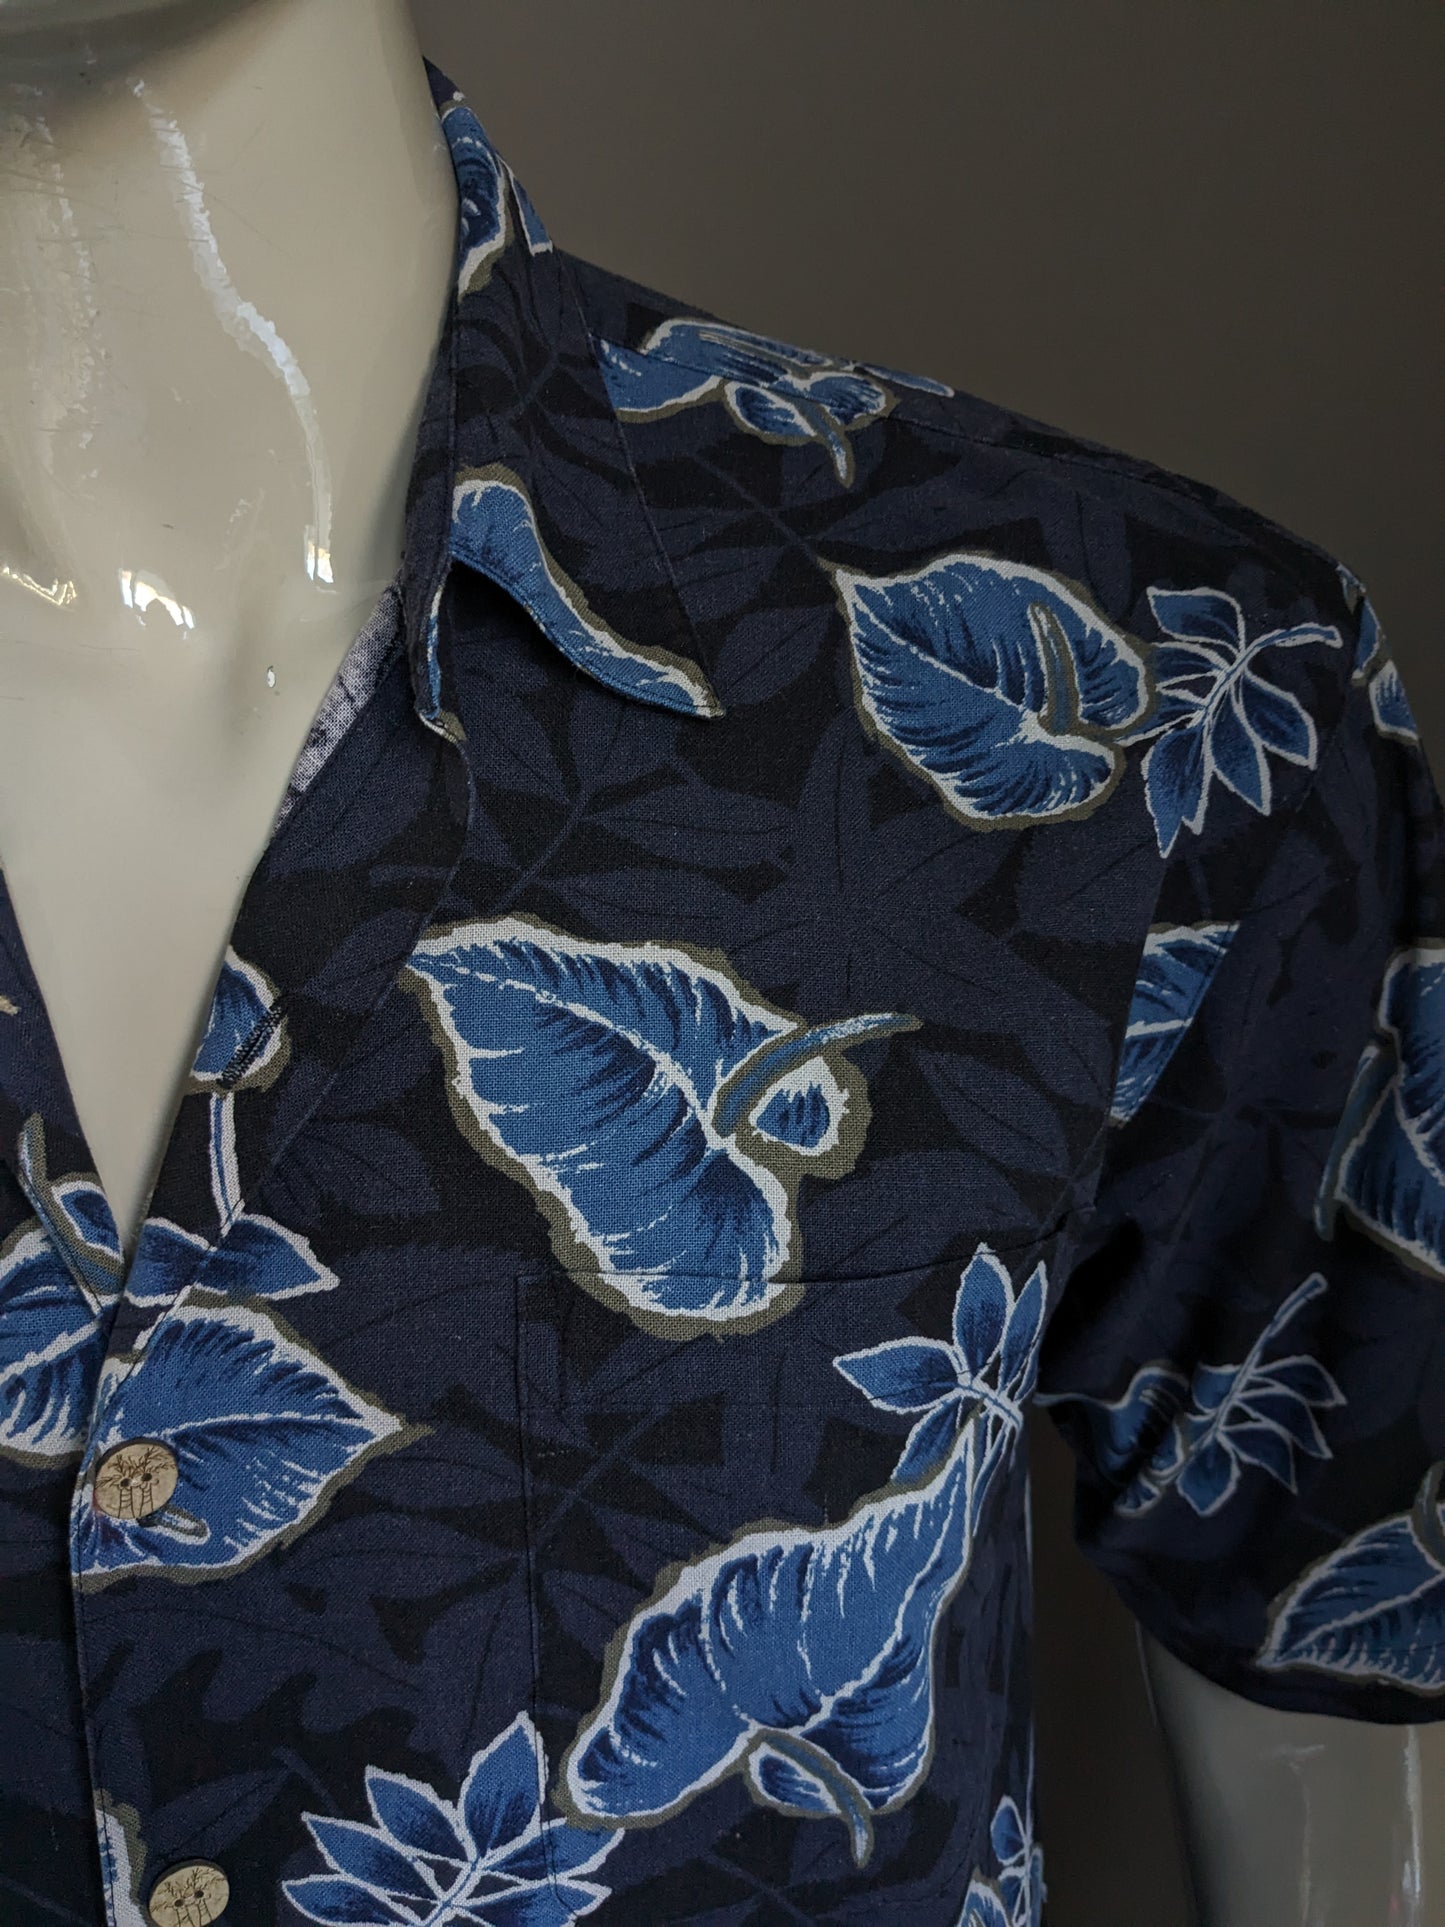 Paradise Blue Silk Hawaii Camisa Manga corta. Motivo de hoja azul. Tamaño xl. 70% de seda.